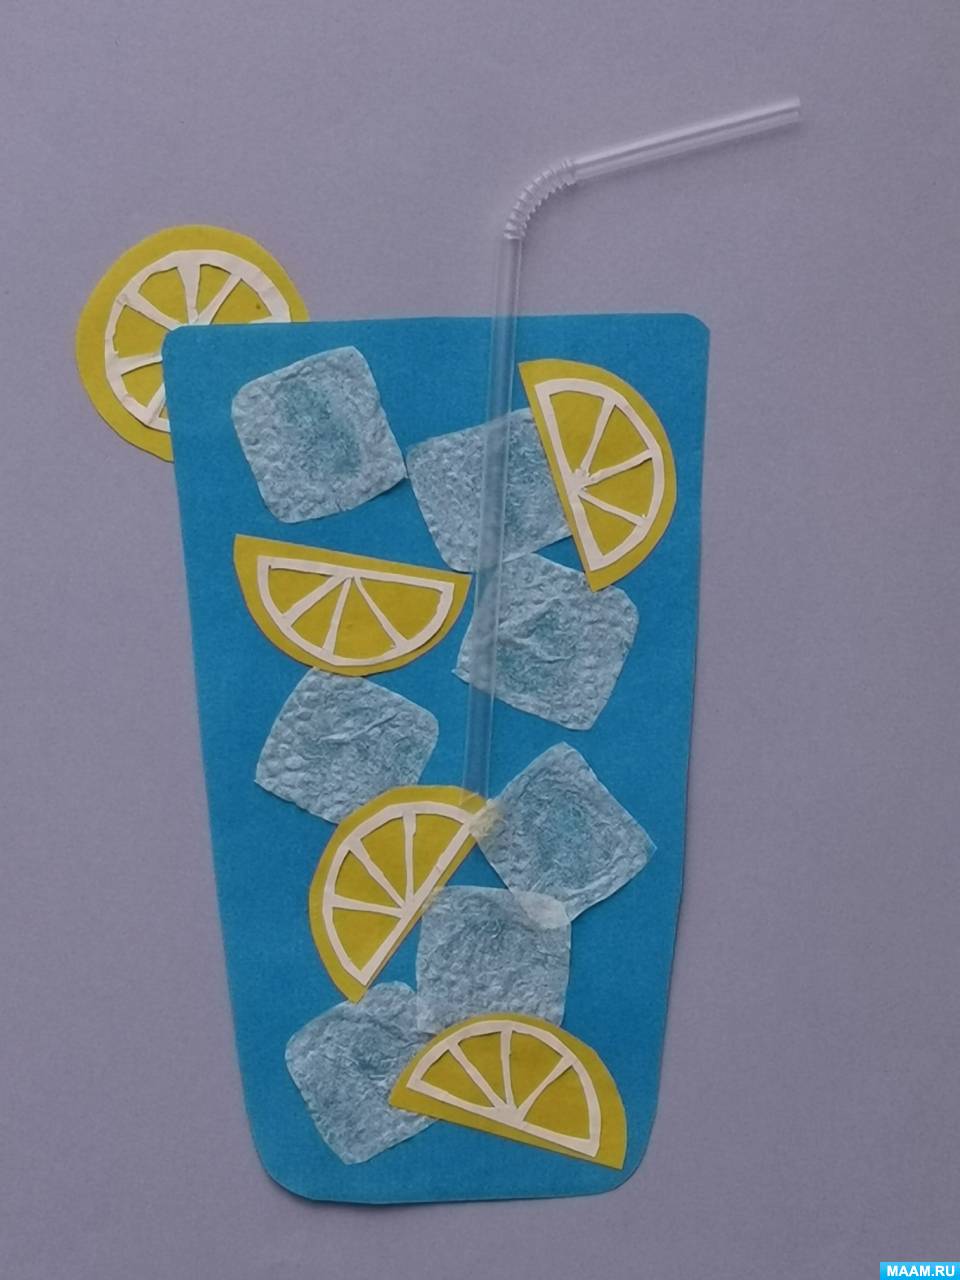 Мастер-класс по аппликации из бумаги и салфеток «Наш любимый напиток — лимонад» ко Дню лимонада на МAAM